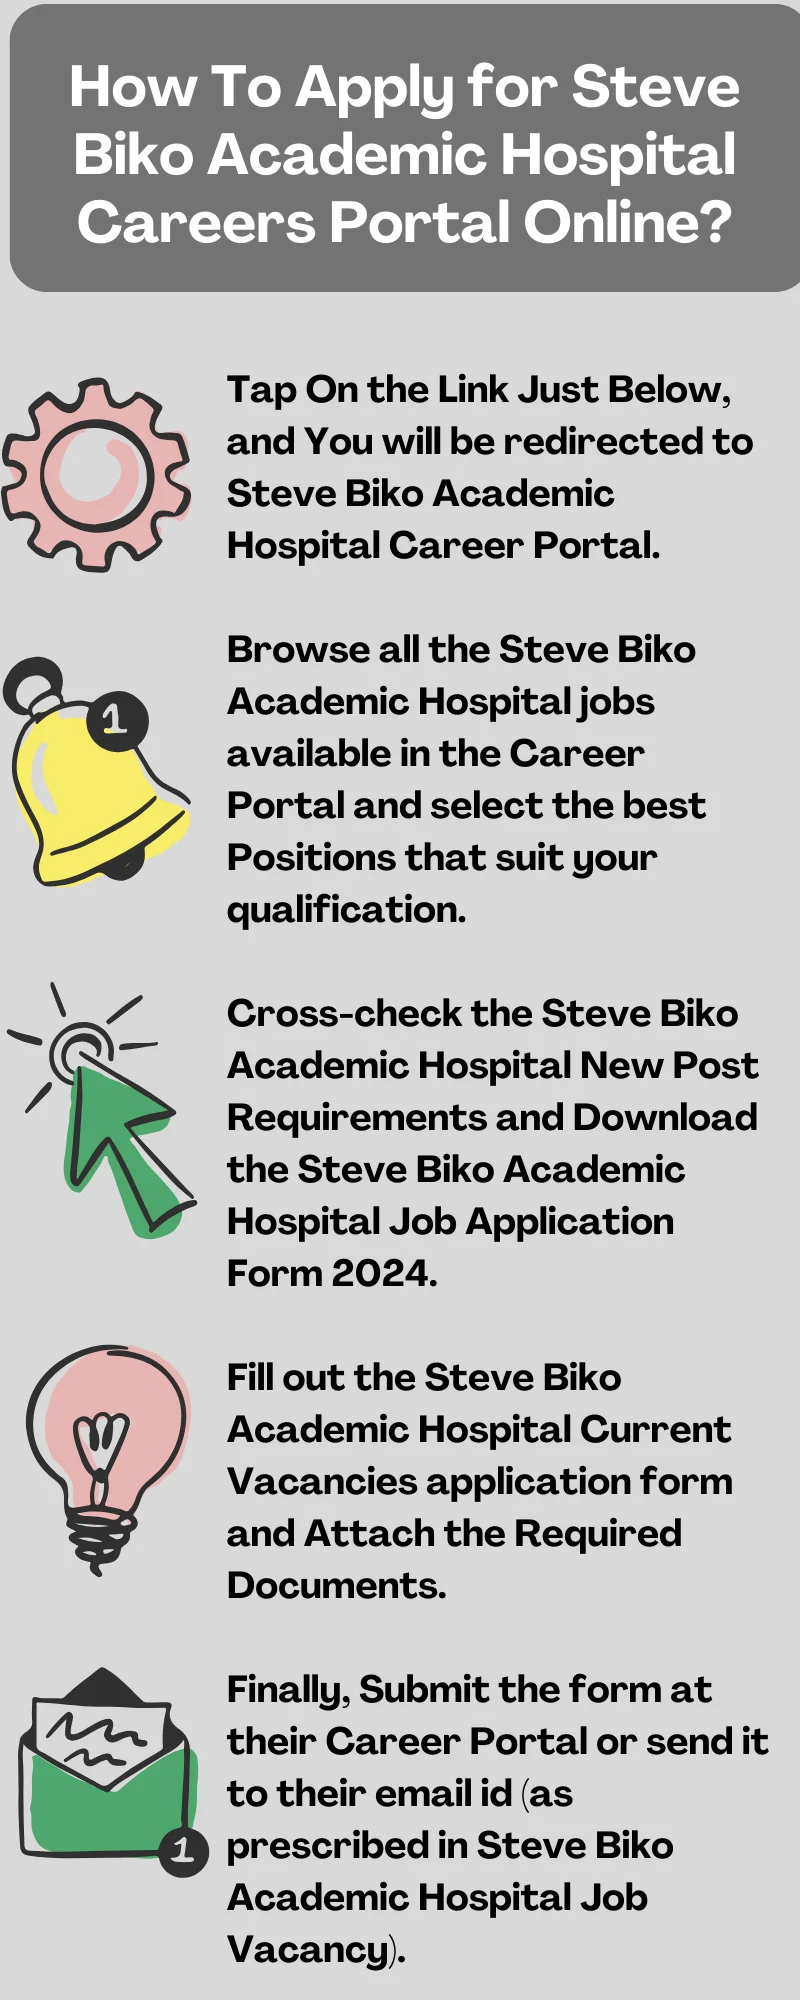 How To Apply for Steve Biko Academic Hospital Careers Portal Online?